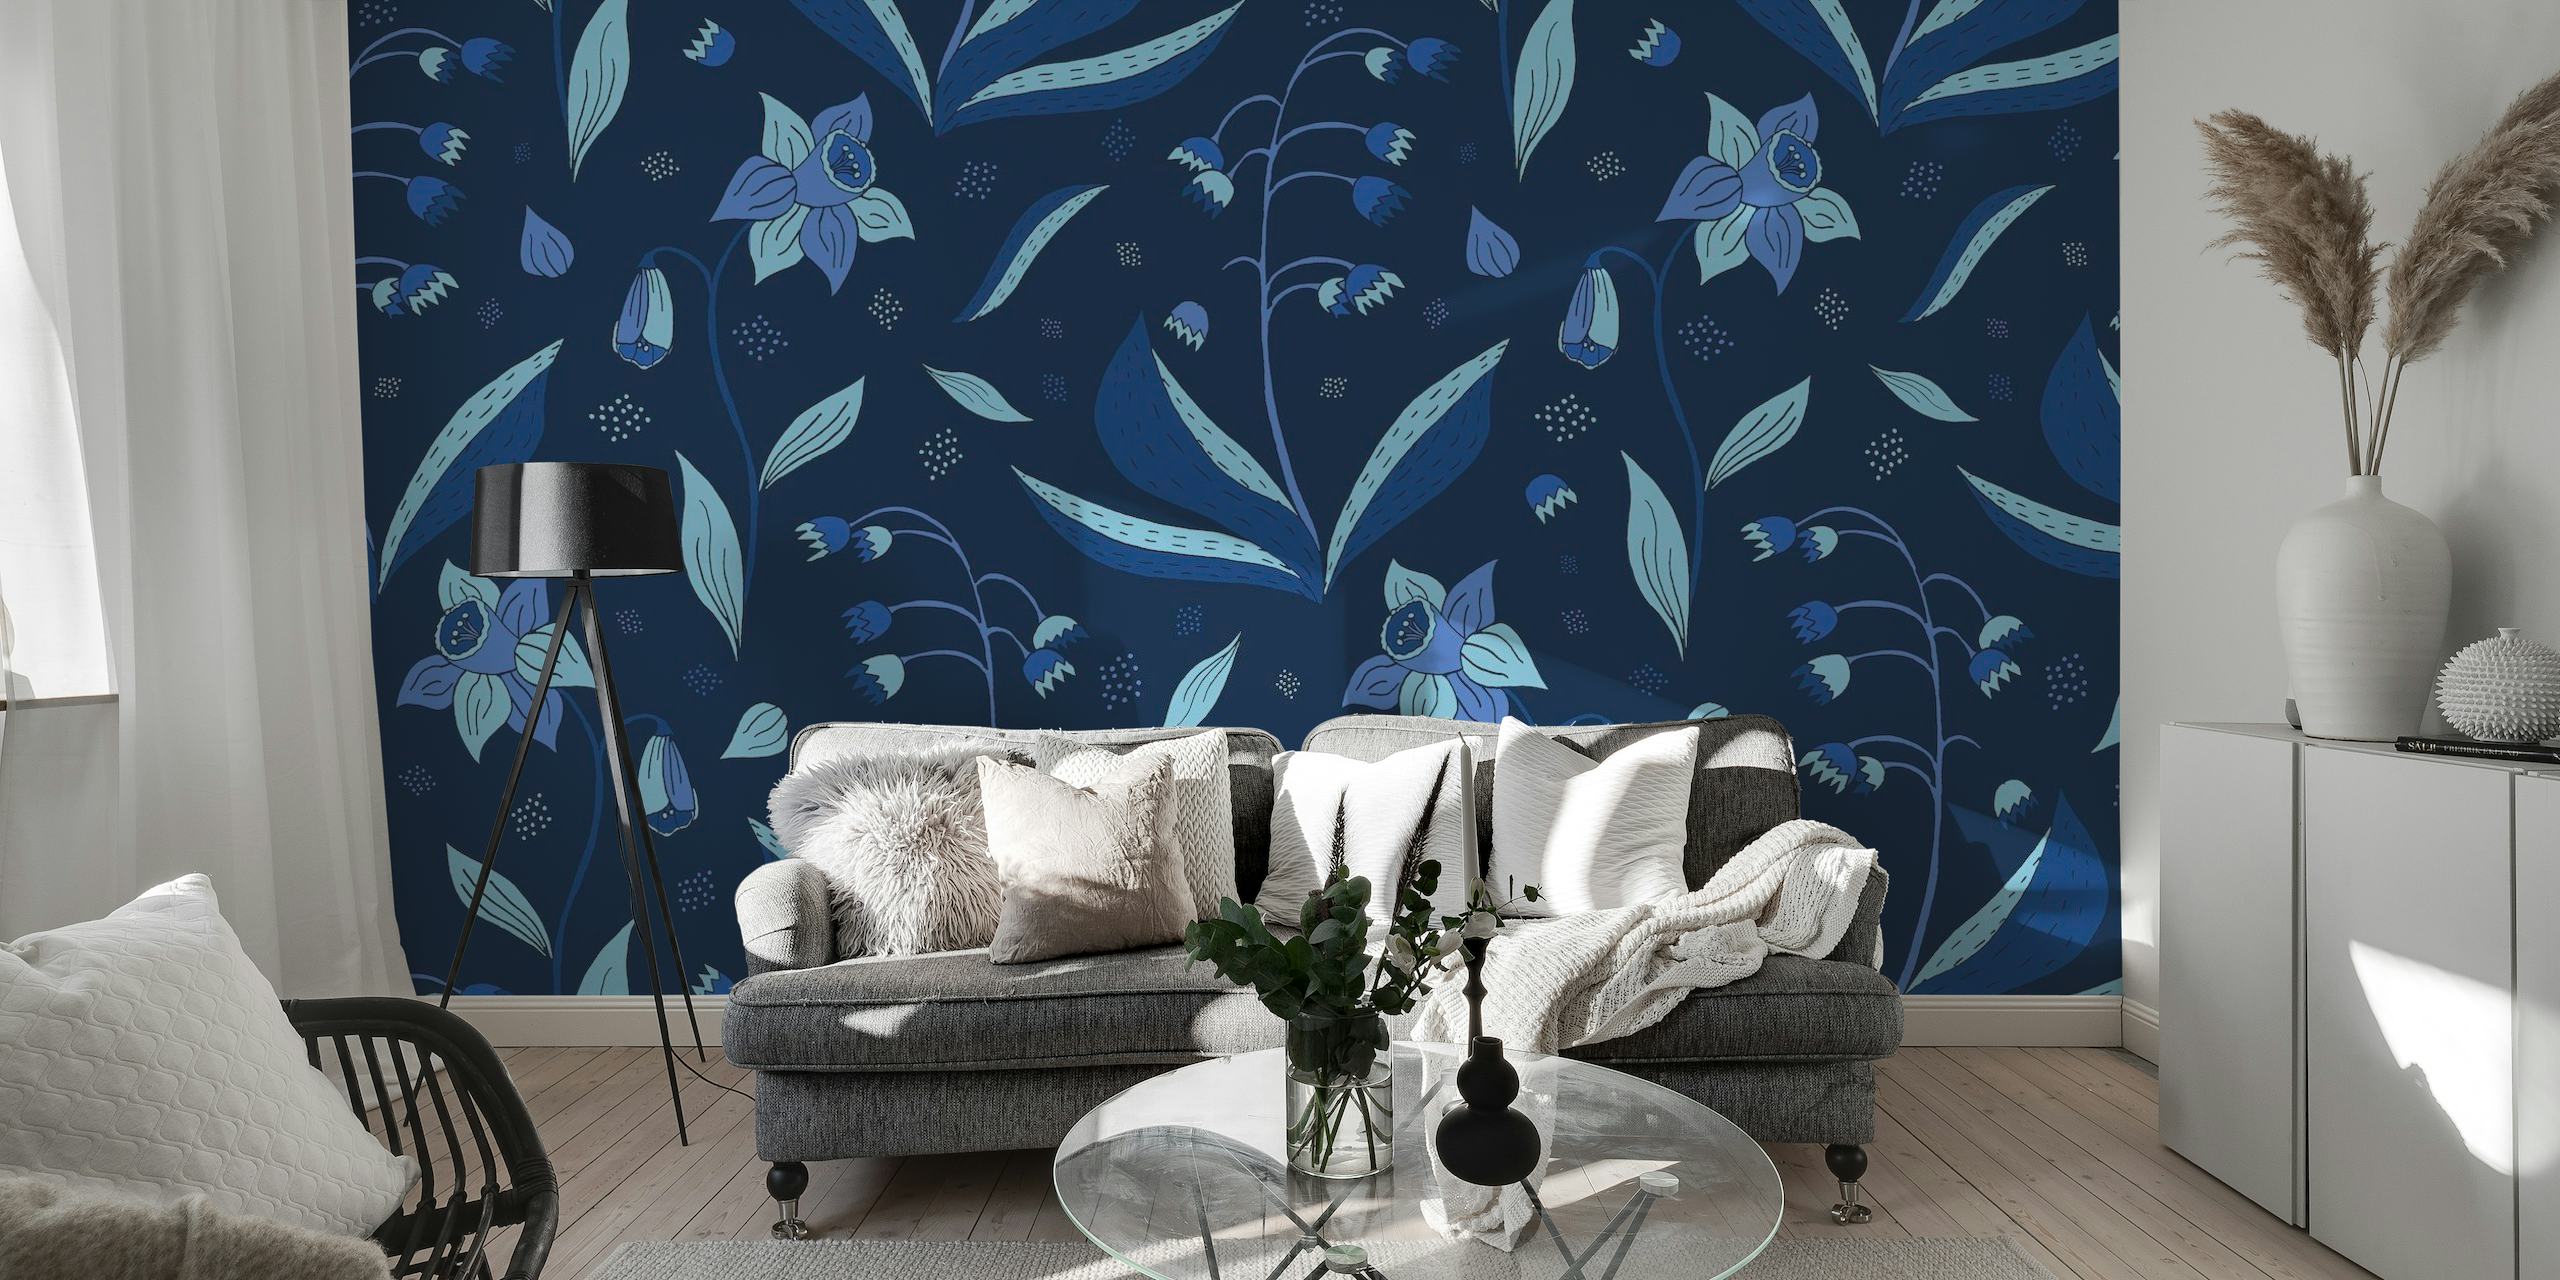 Zidna slika Midnight Blue Garden s cvjetnim uzorcima